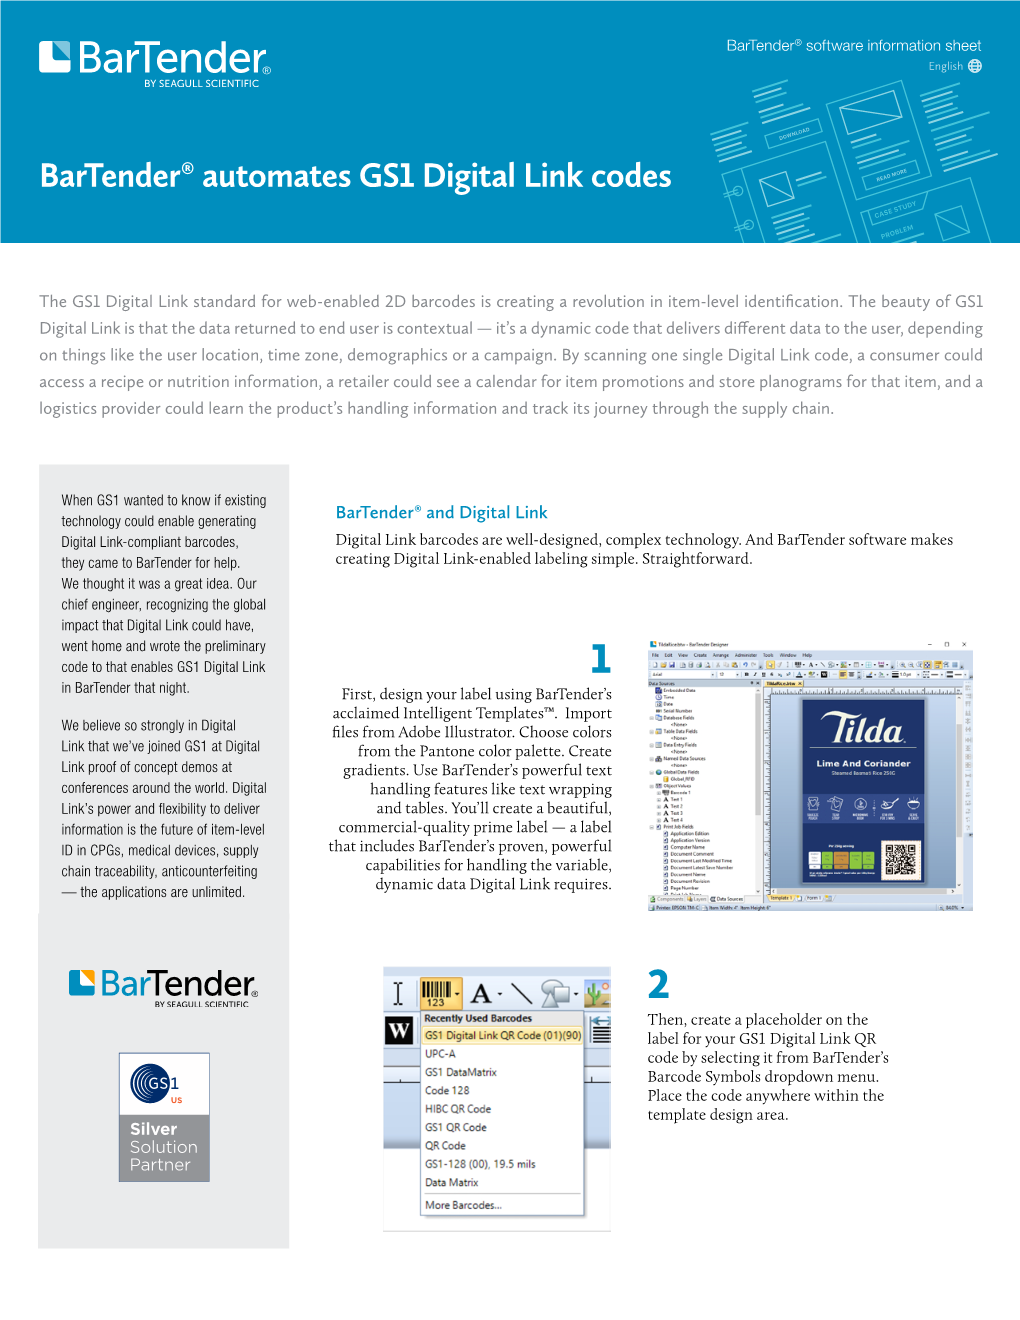 Bartender Automates GS1 Digital Link Codes